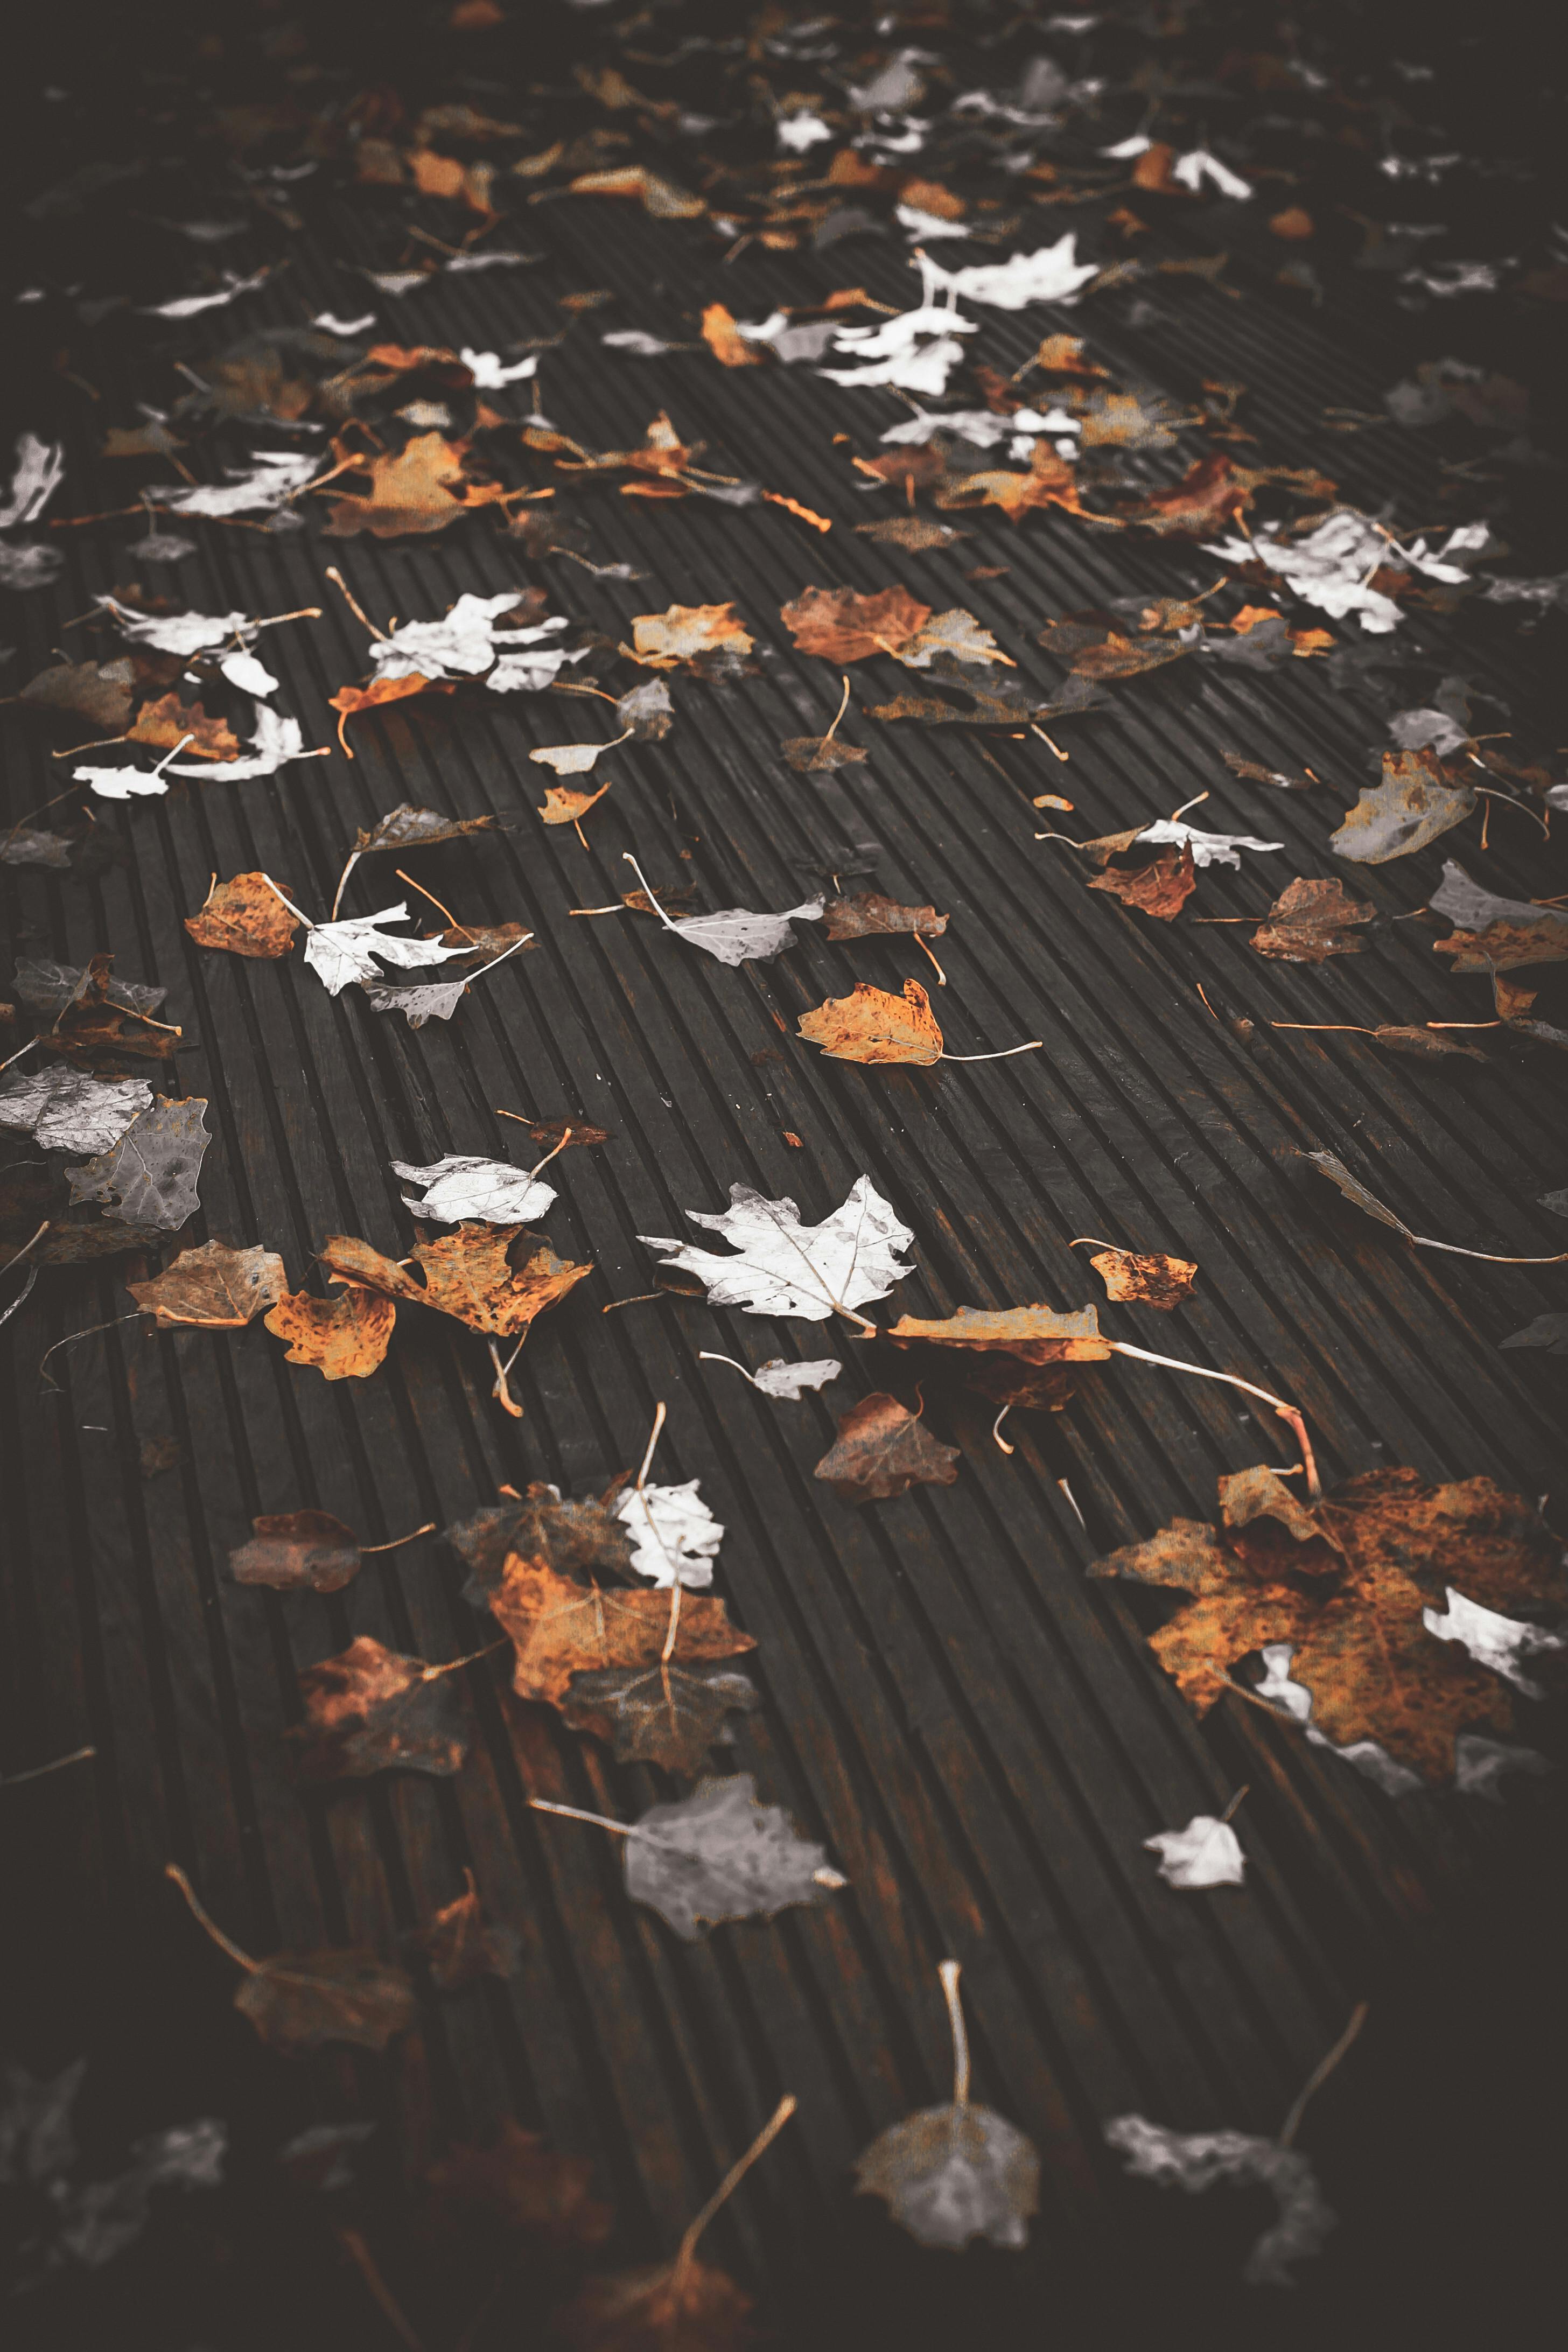 Fallen leaves on wooden ground in autumn street · Free Stock Photo